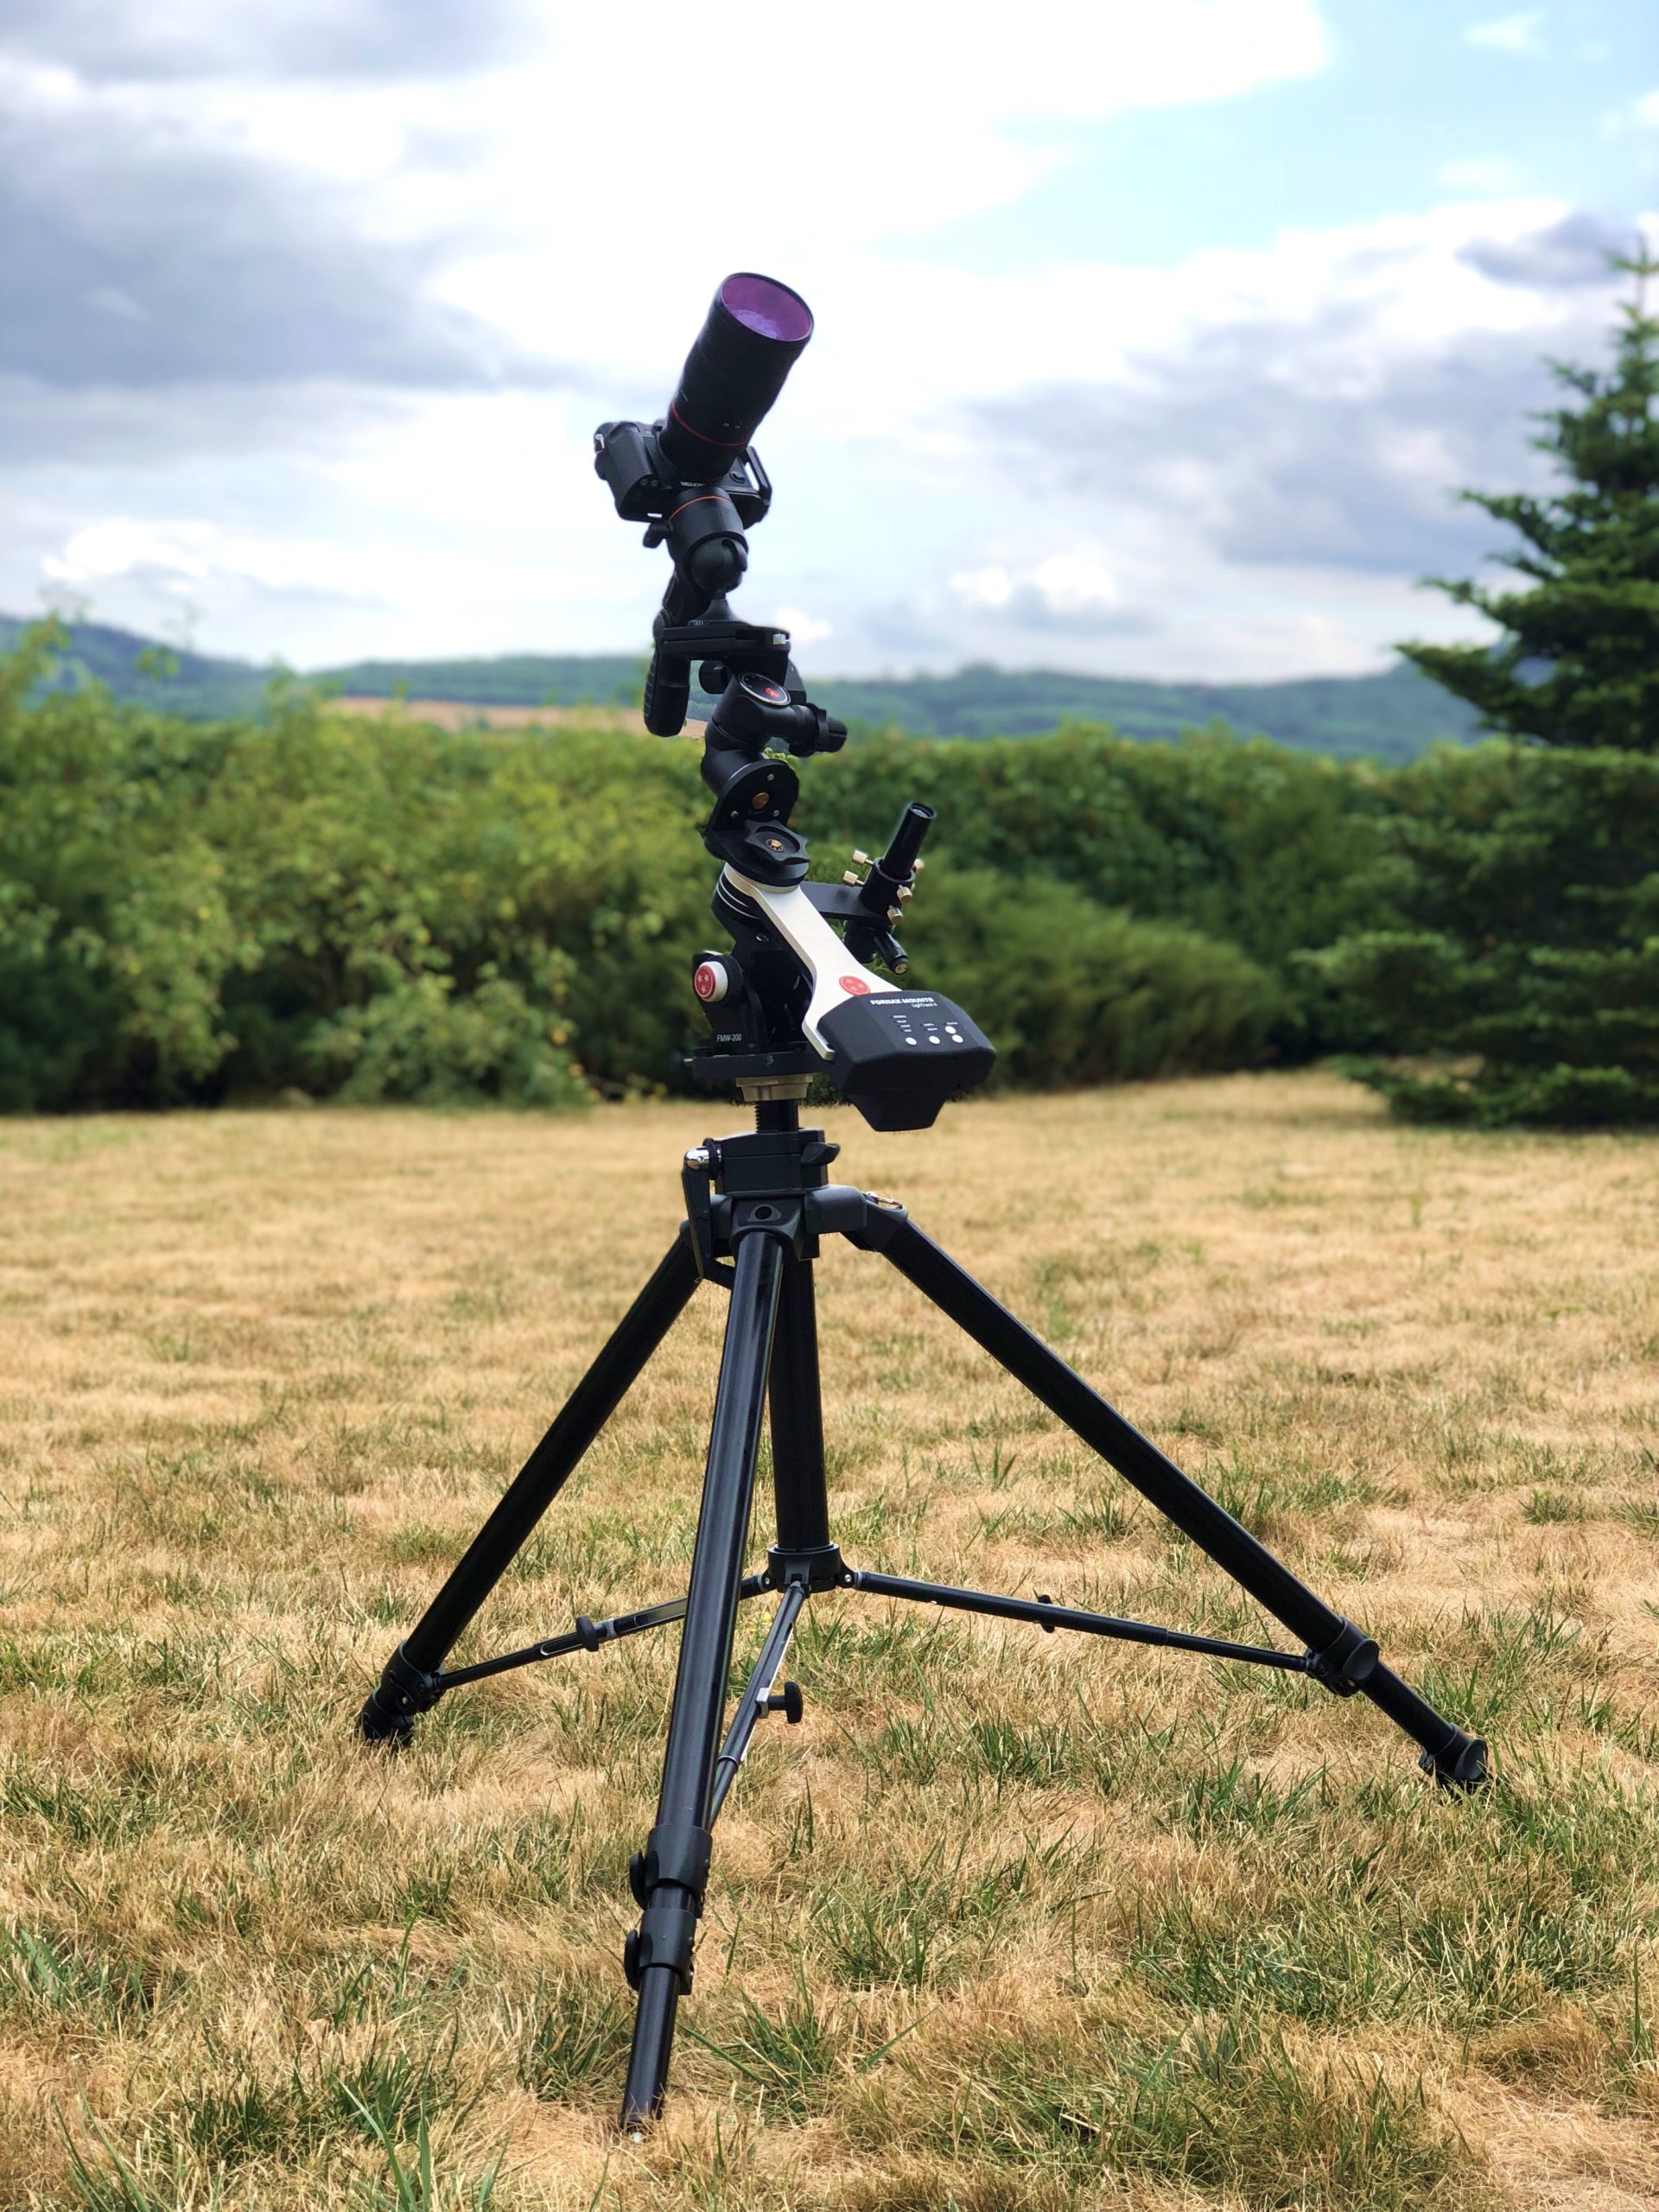 My mobile widefield deep-sky astrophotography setup